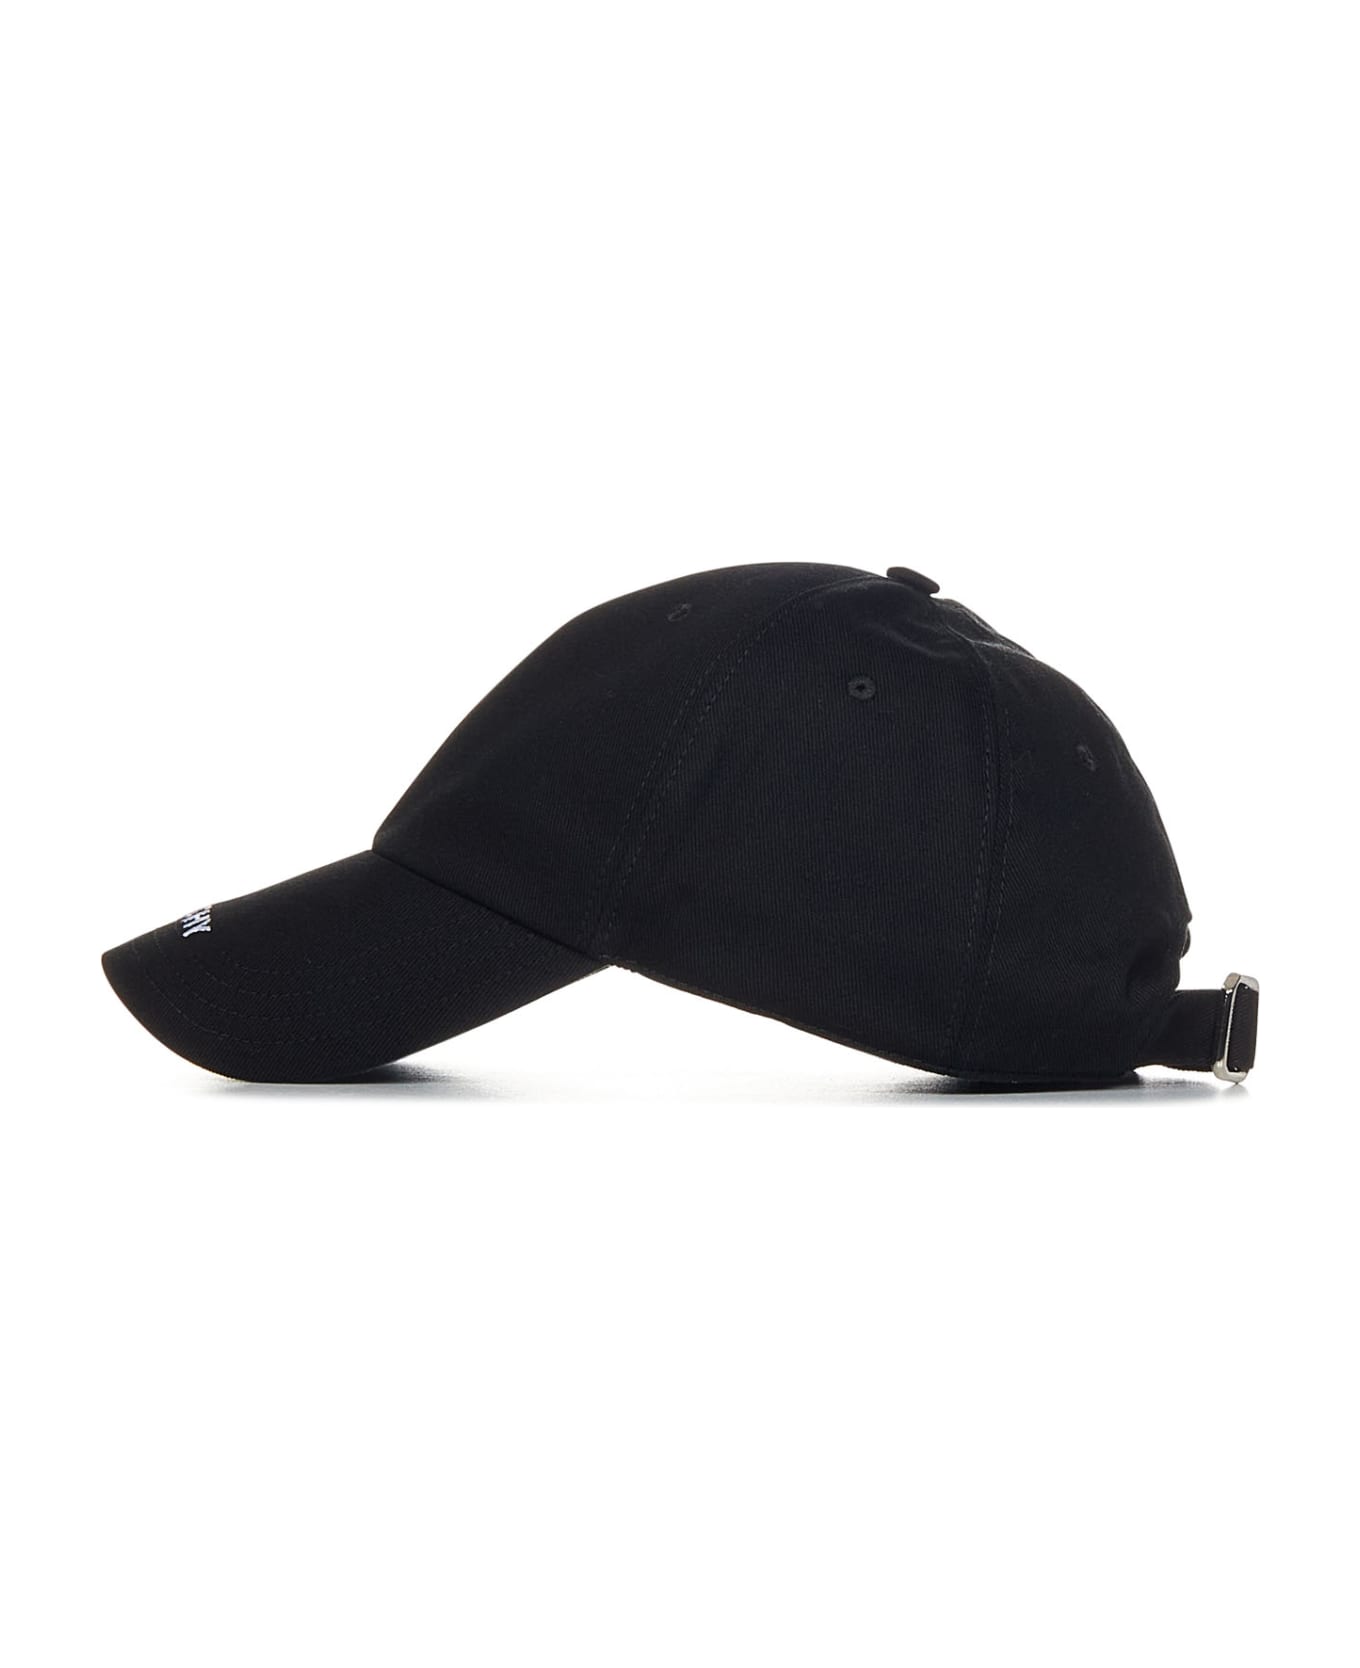 Givenchy Hat - Black